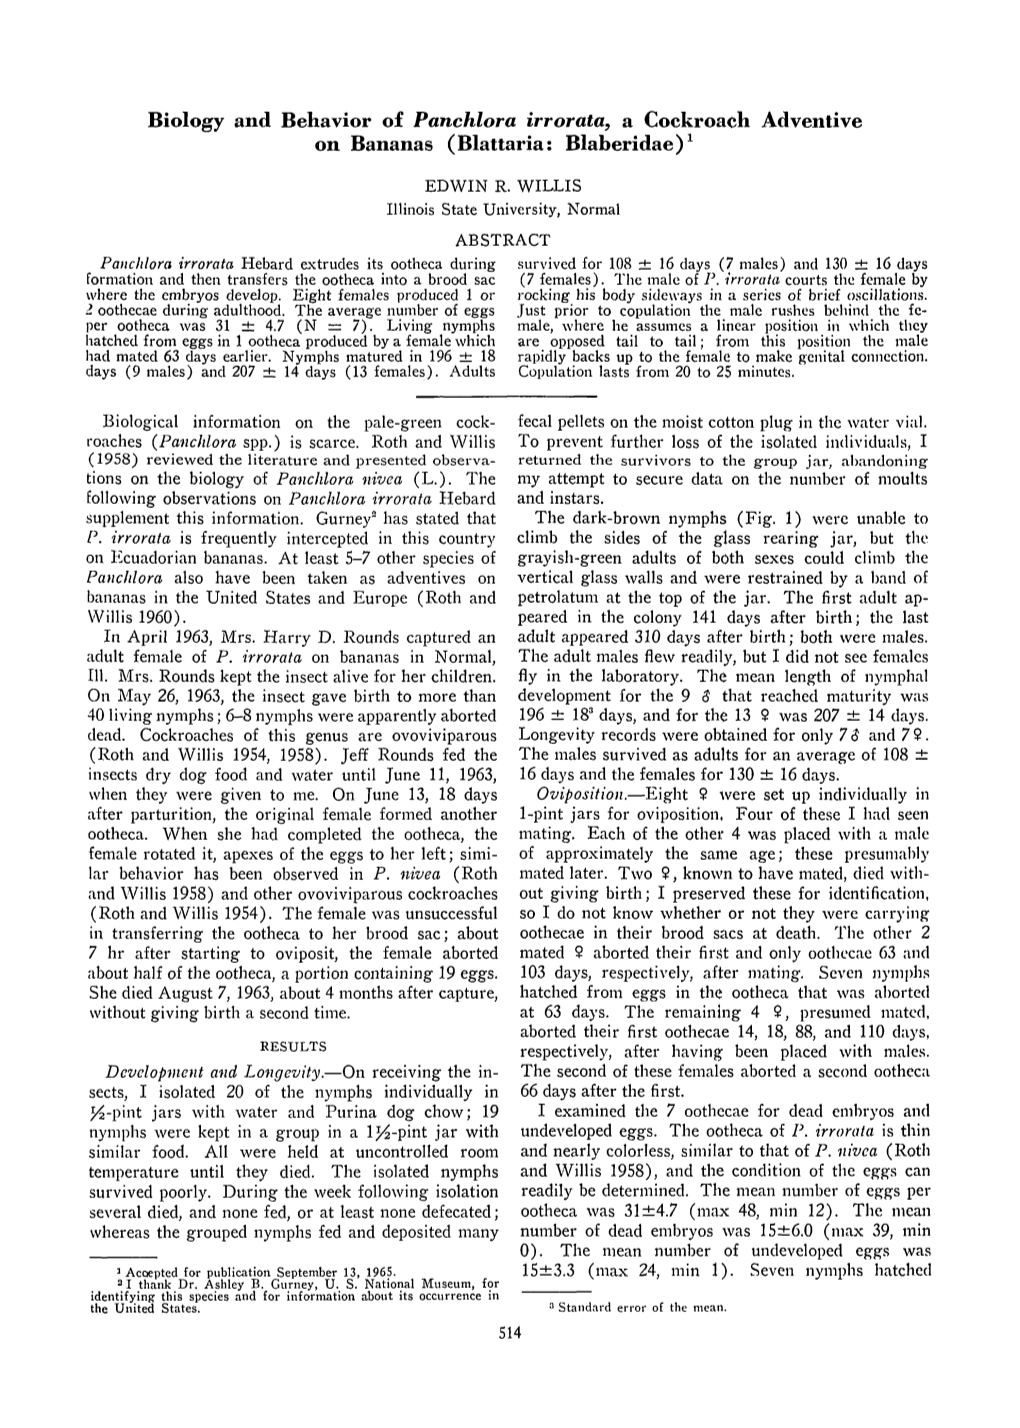 Biology and Behavior of Panchlora Irrorata, a Cockroach Adventive on Bananas (Blattaria: Blaberidae)1